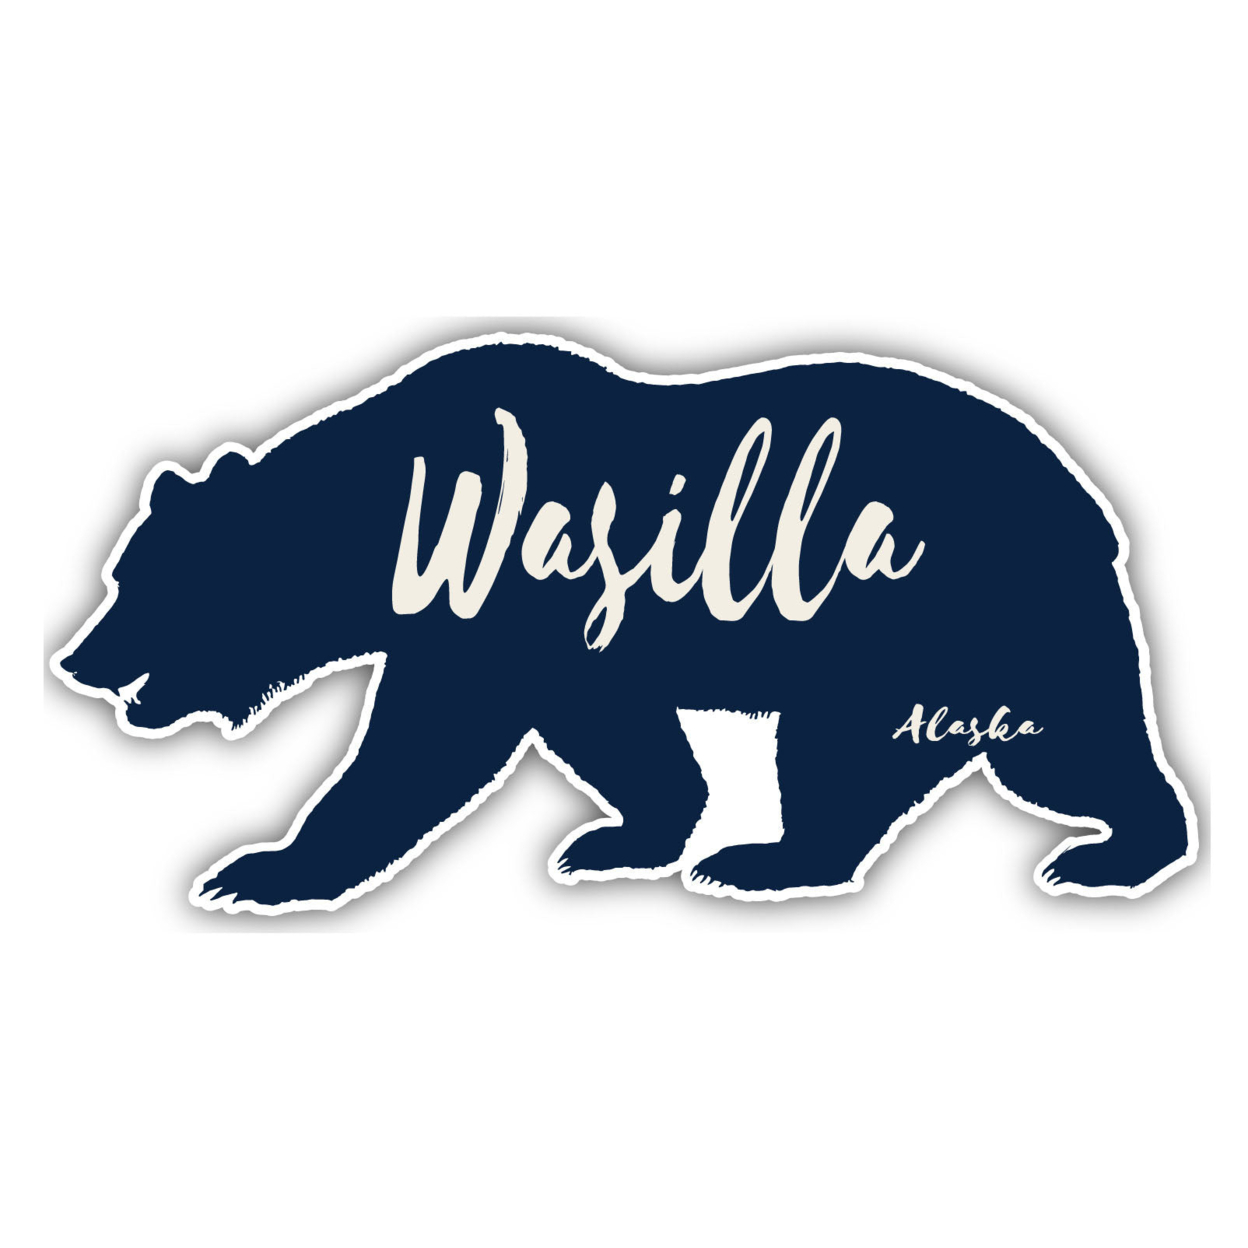 Wasilla Alaska Souvenir Decorative Stickers (Choose Theme And Size) - Single Unit, 2-Inch, Great Outdoors